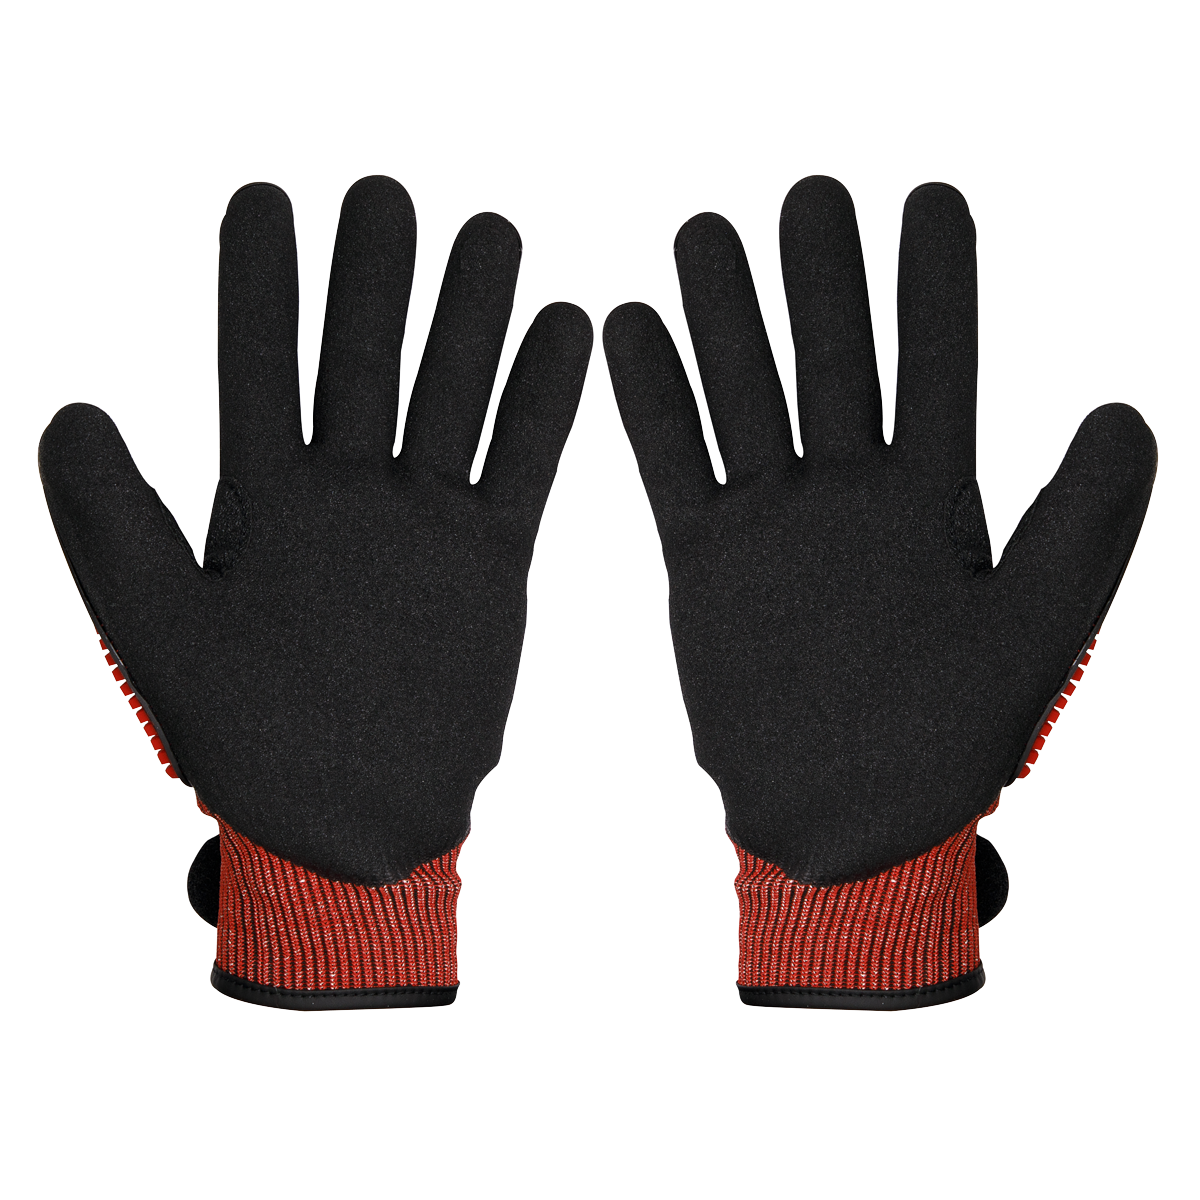 Cut & Impact Resistant Gloves - Pair